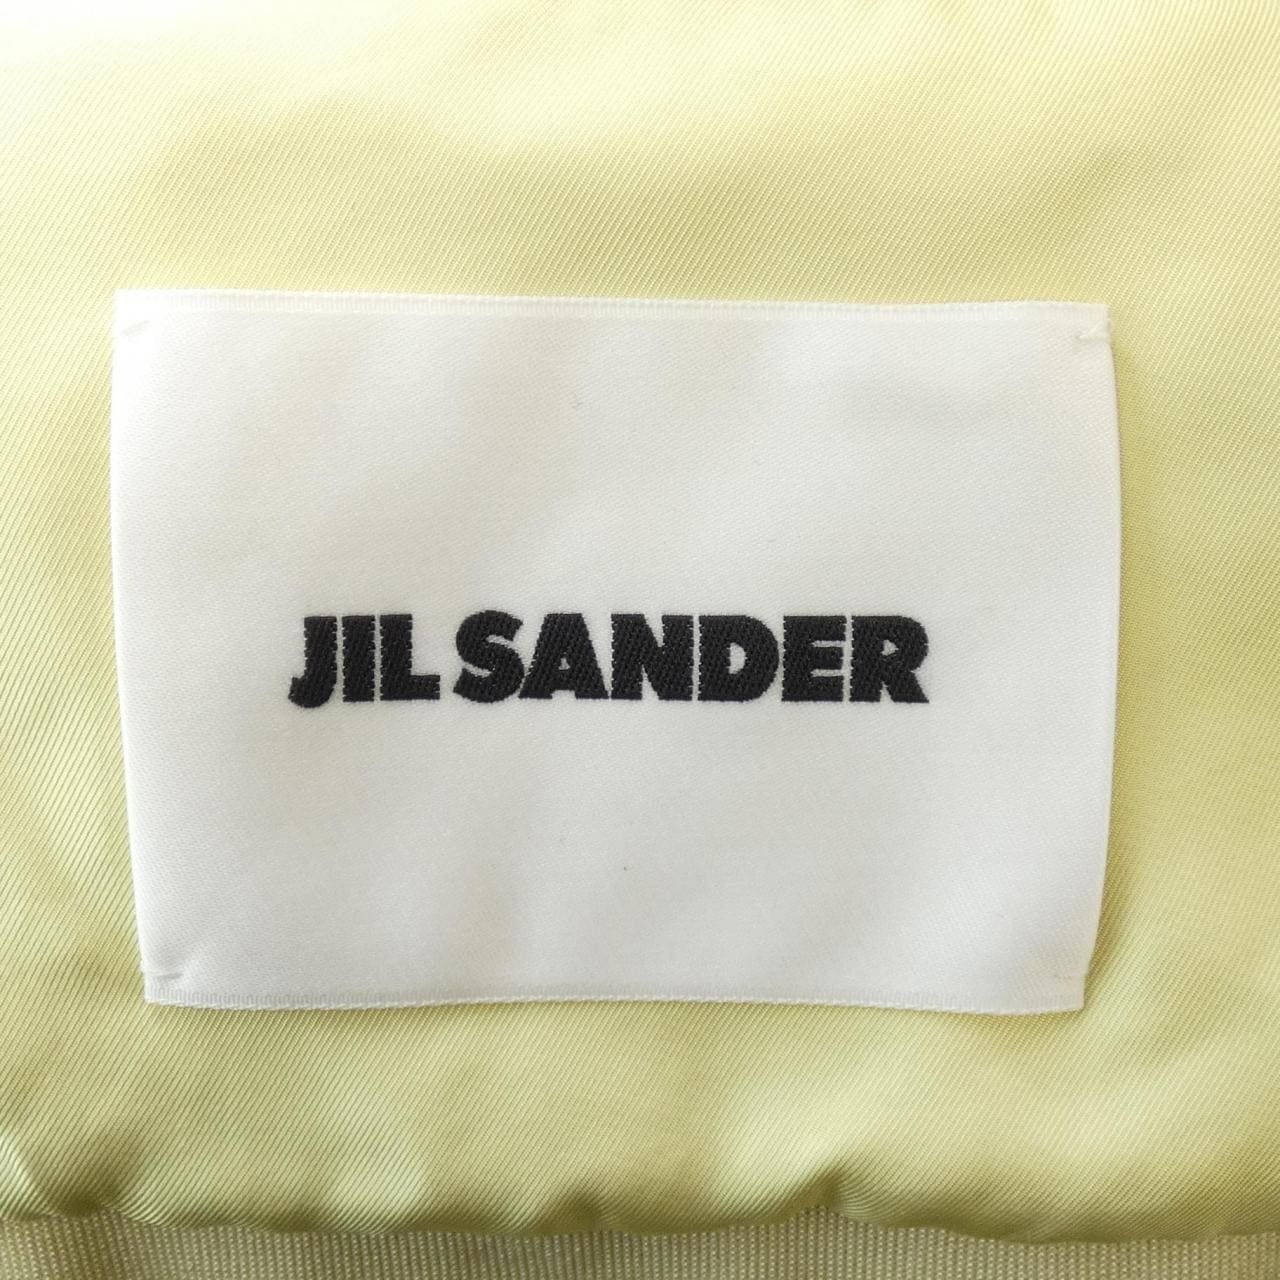 JIL SANDER吉尔·桑德 (Jil Sander) 衬衫